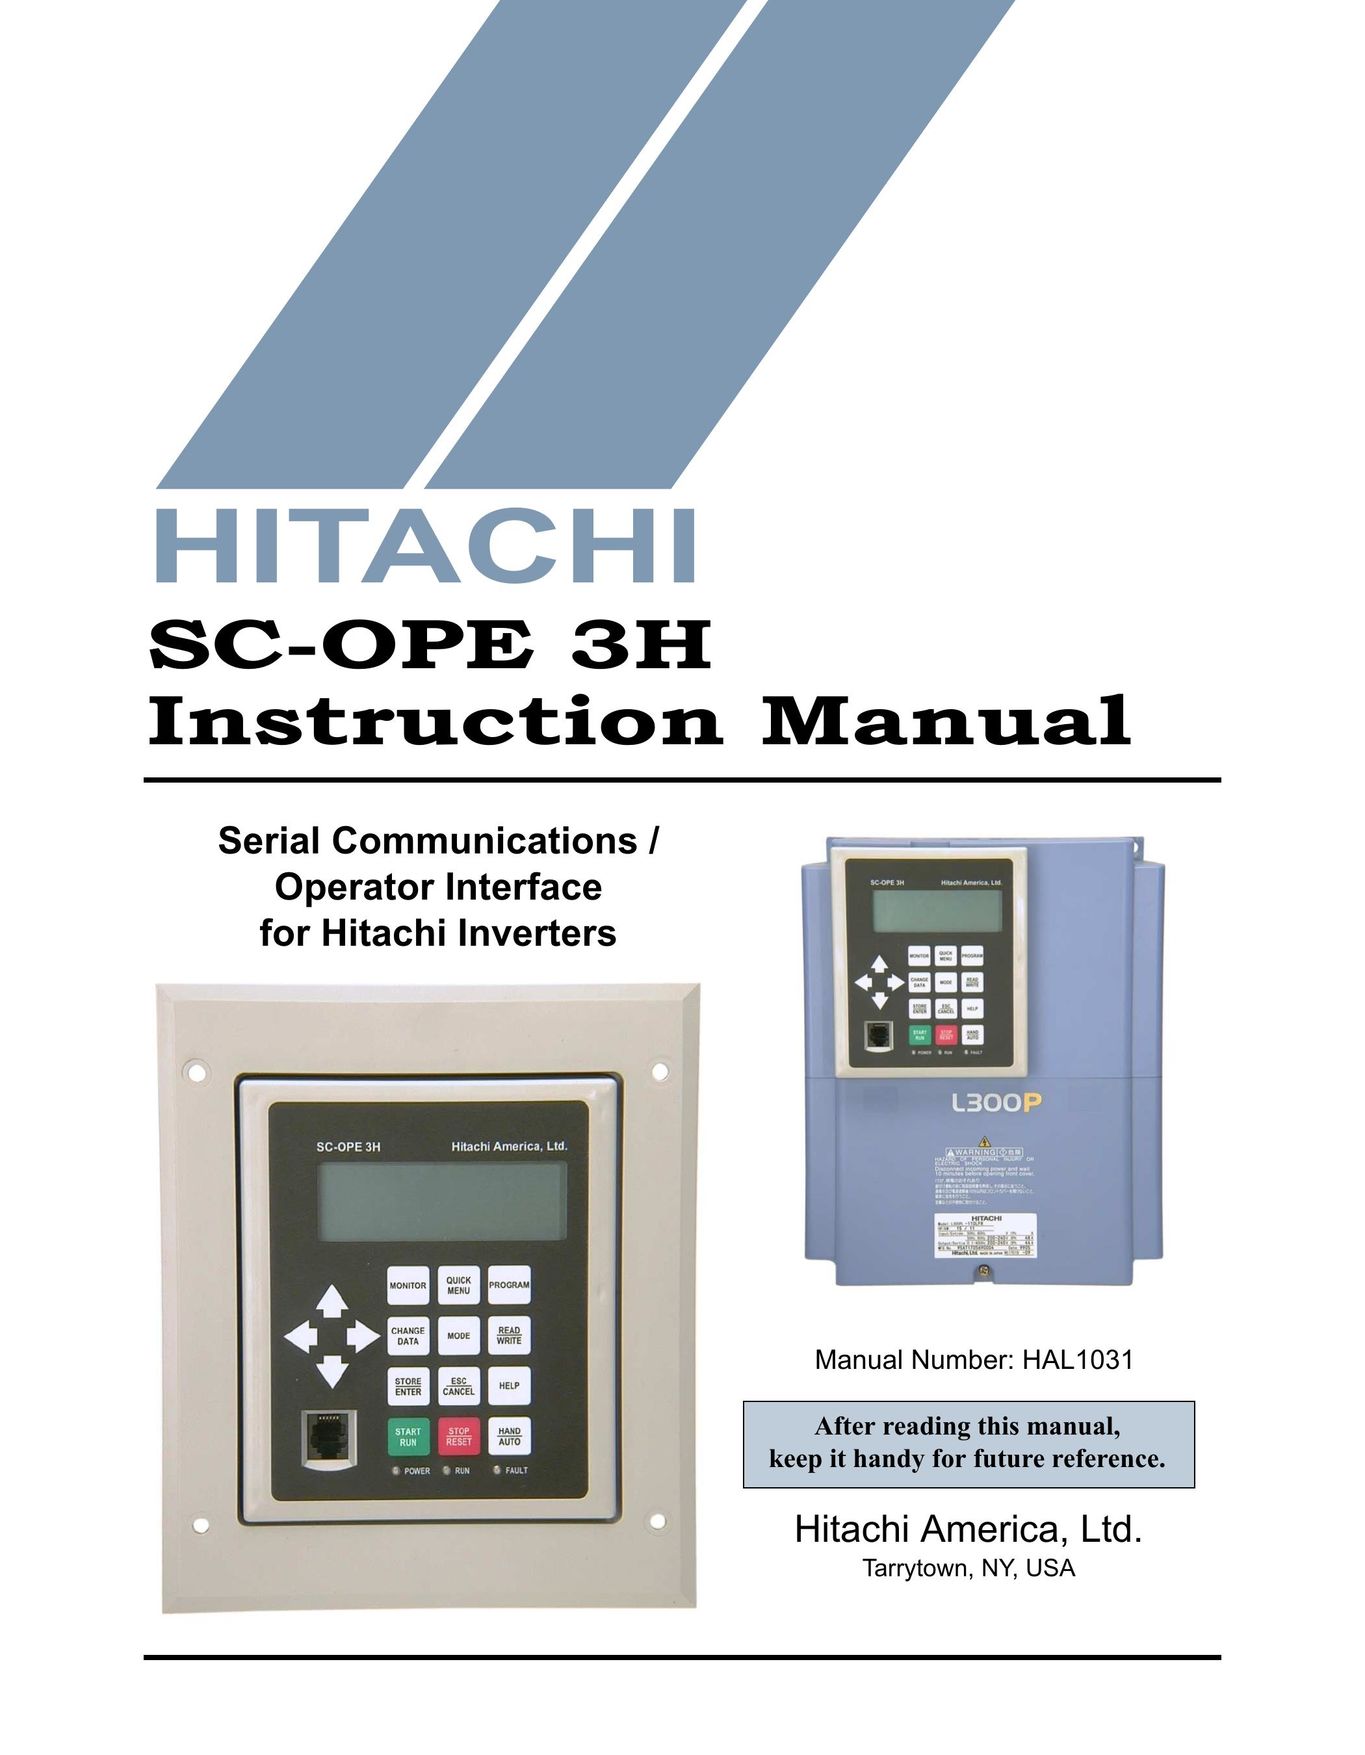 Hitachi Koki USA SC-OPE 3H Building Set User Manual